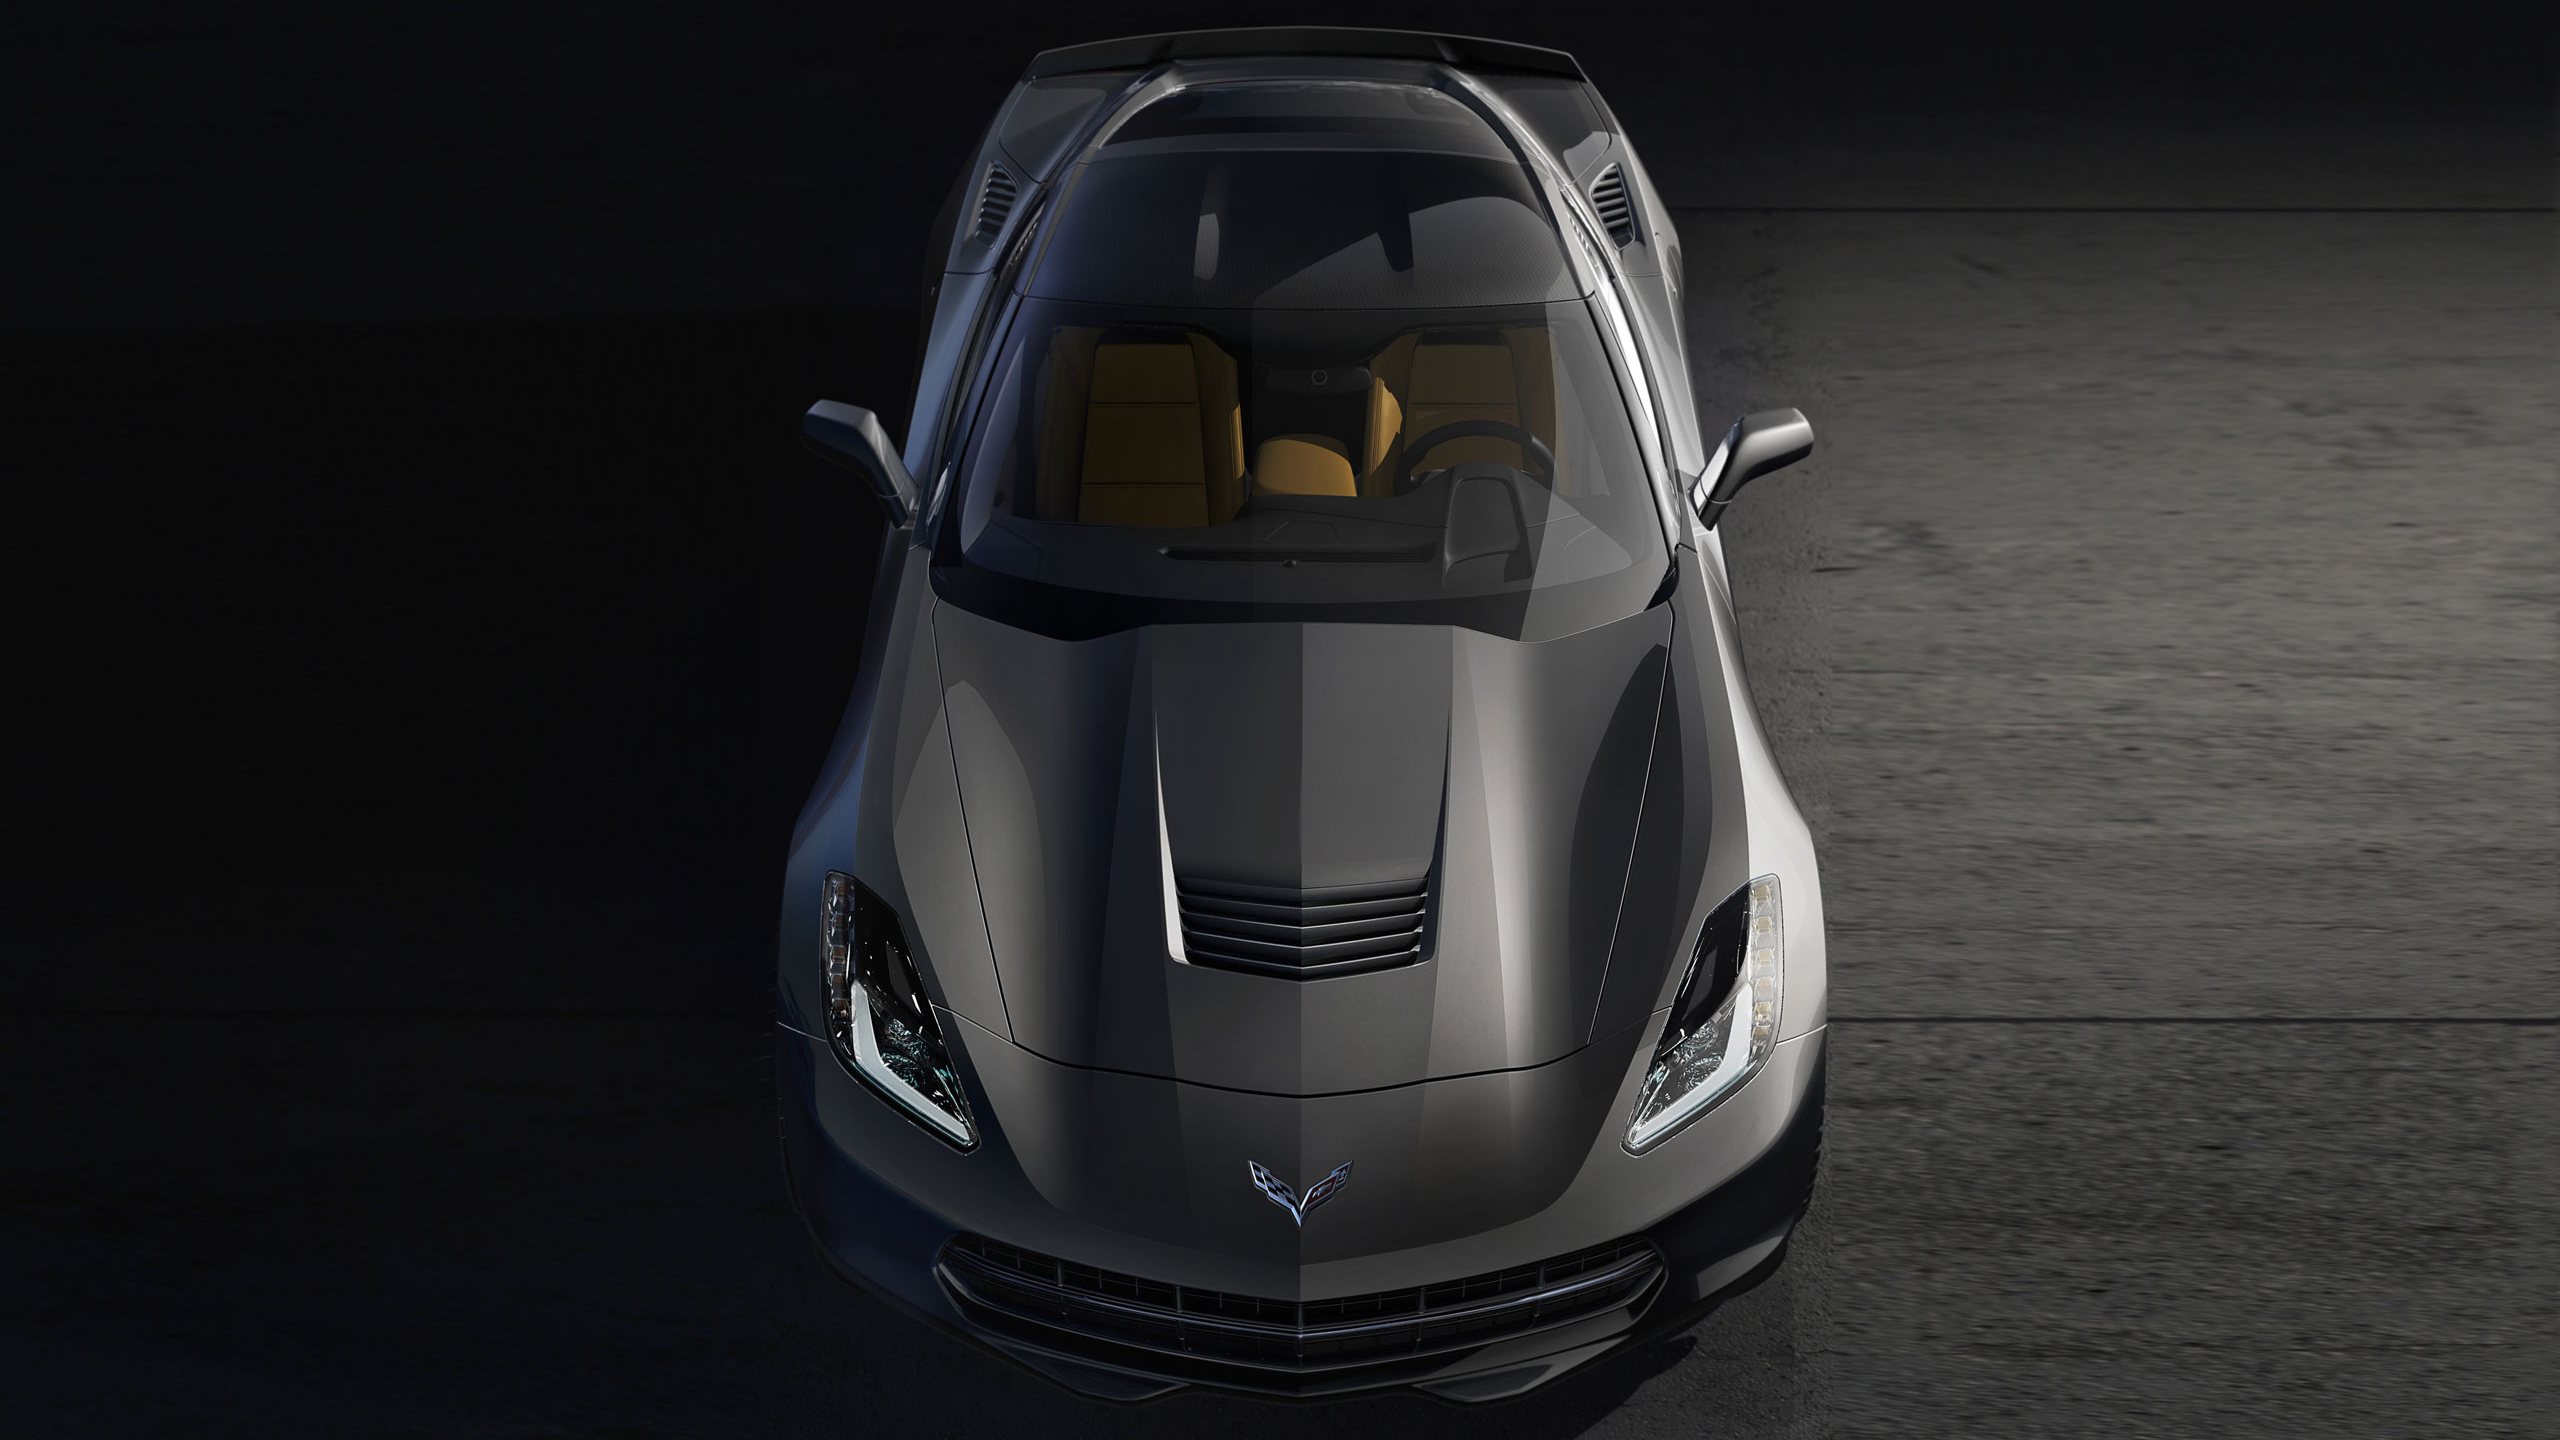 Corvette%20C7%20Stingray%202014%20(3)%202560x1440.jpg